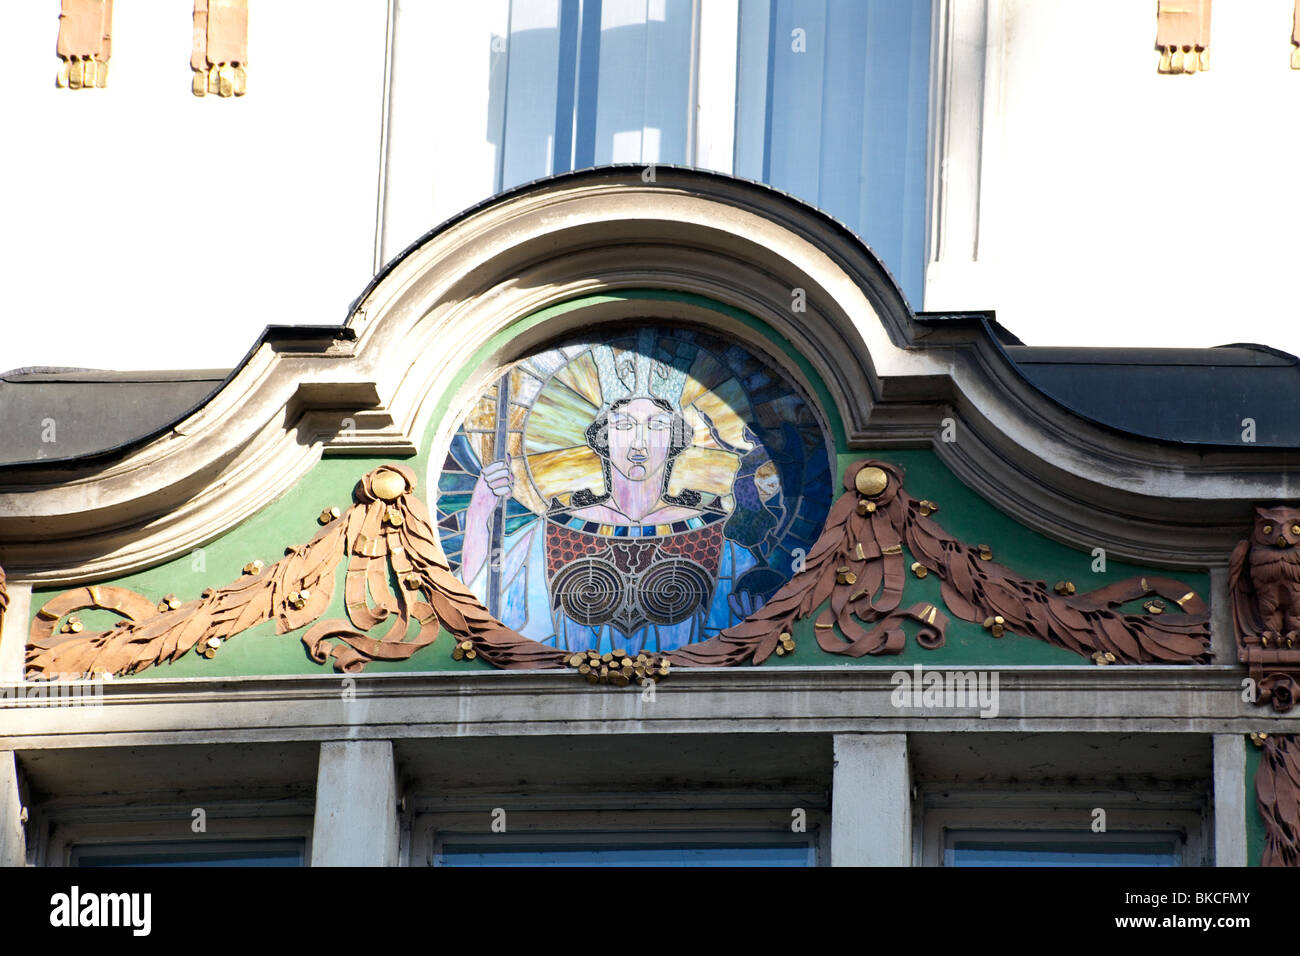 Detalle de la fachada del tema (Topich) imprenta, Narodni Trida, Praga, República Checa Foto de stock